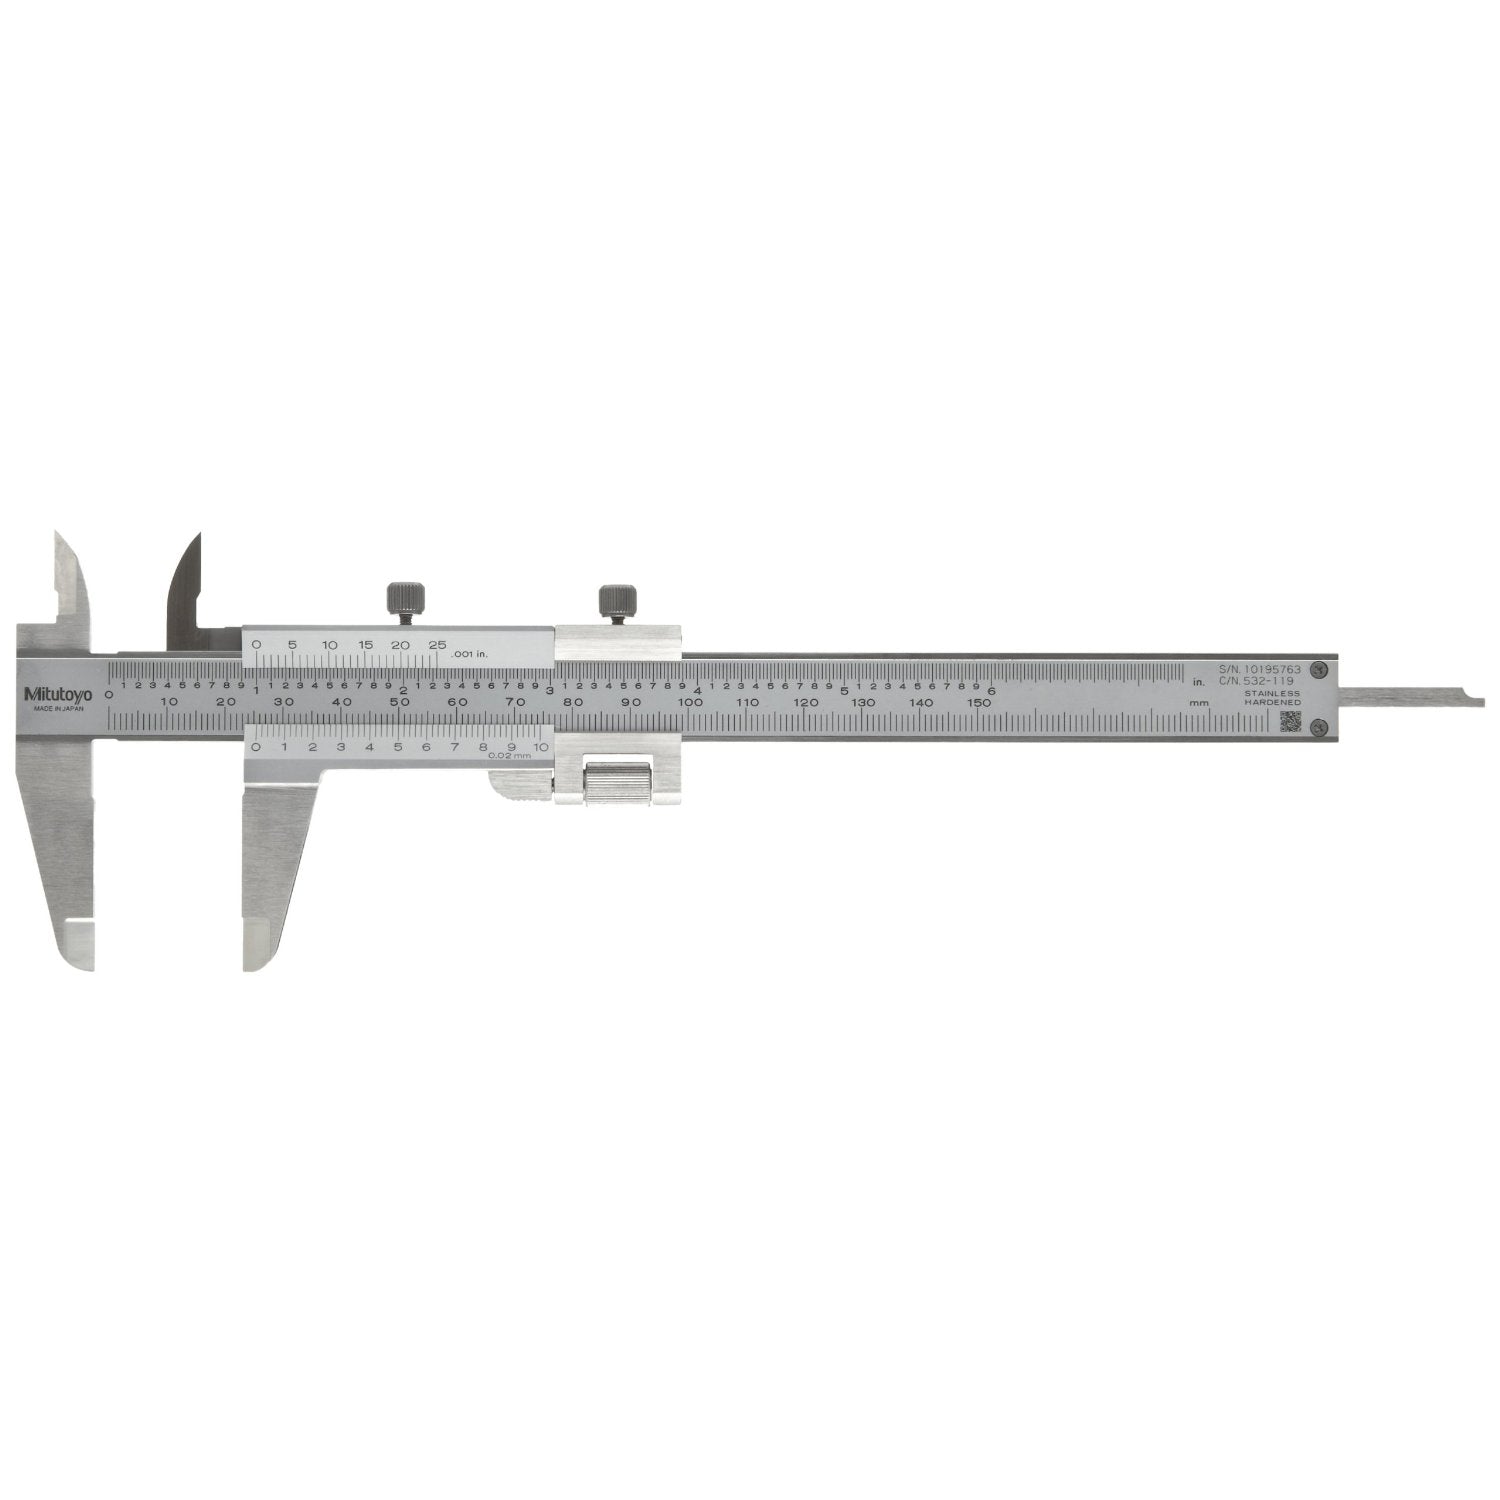 Mitutoyo Vernier Scale Caliper with Fine Adjustment - Series 532